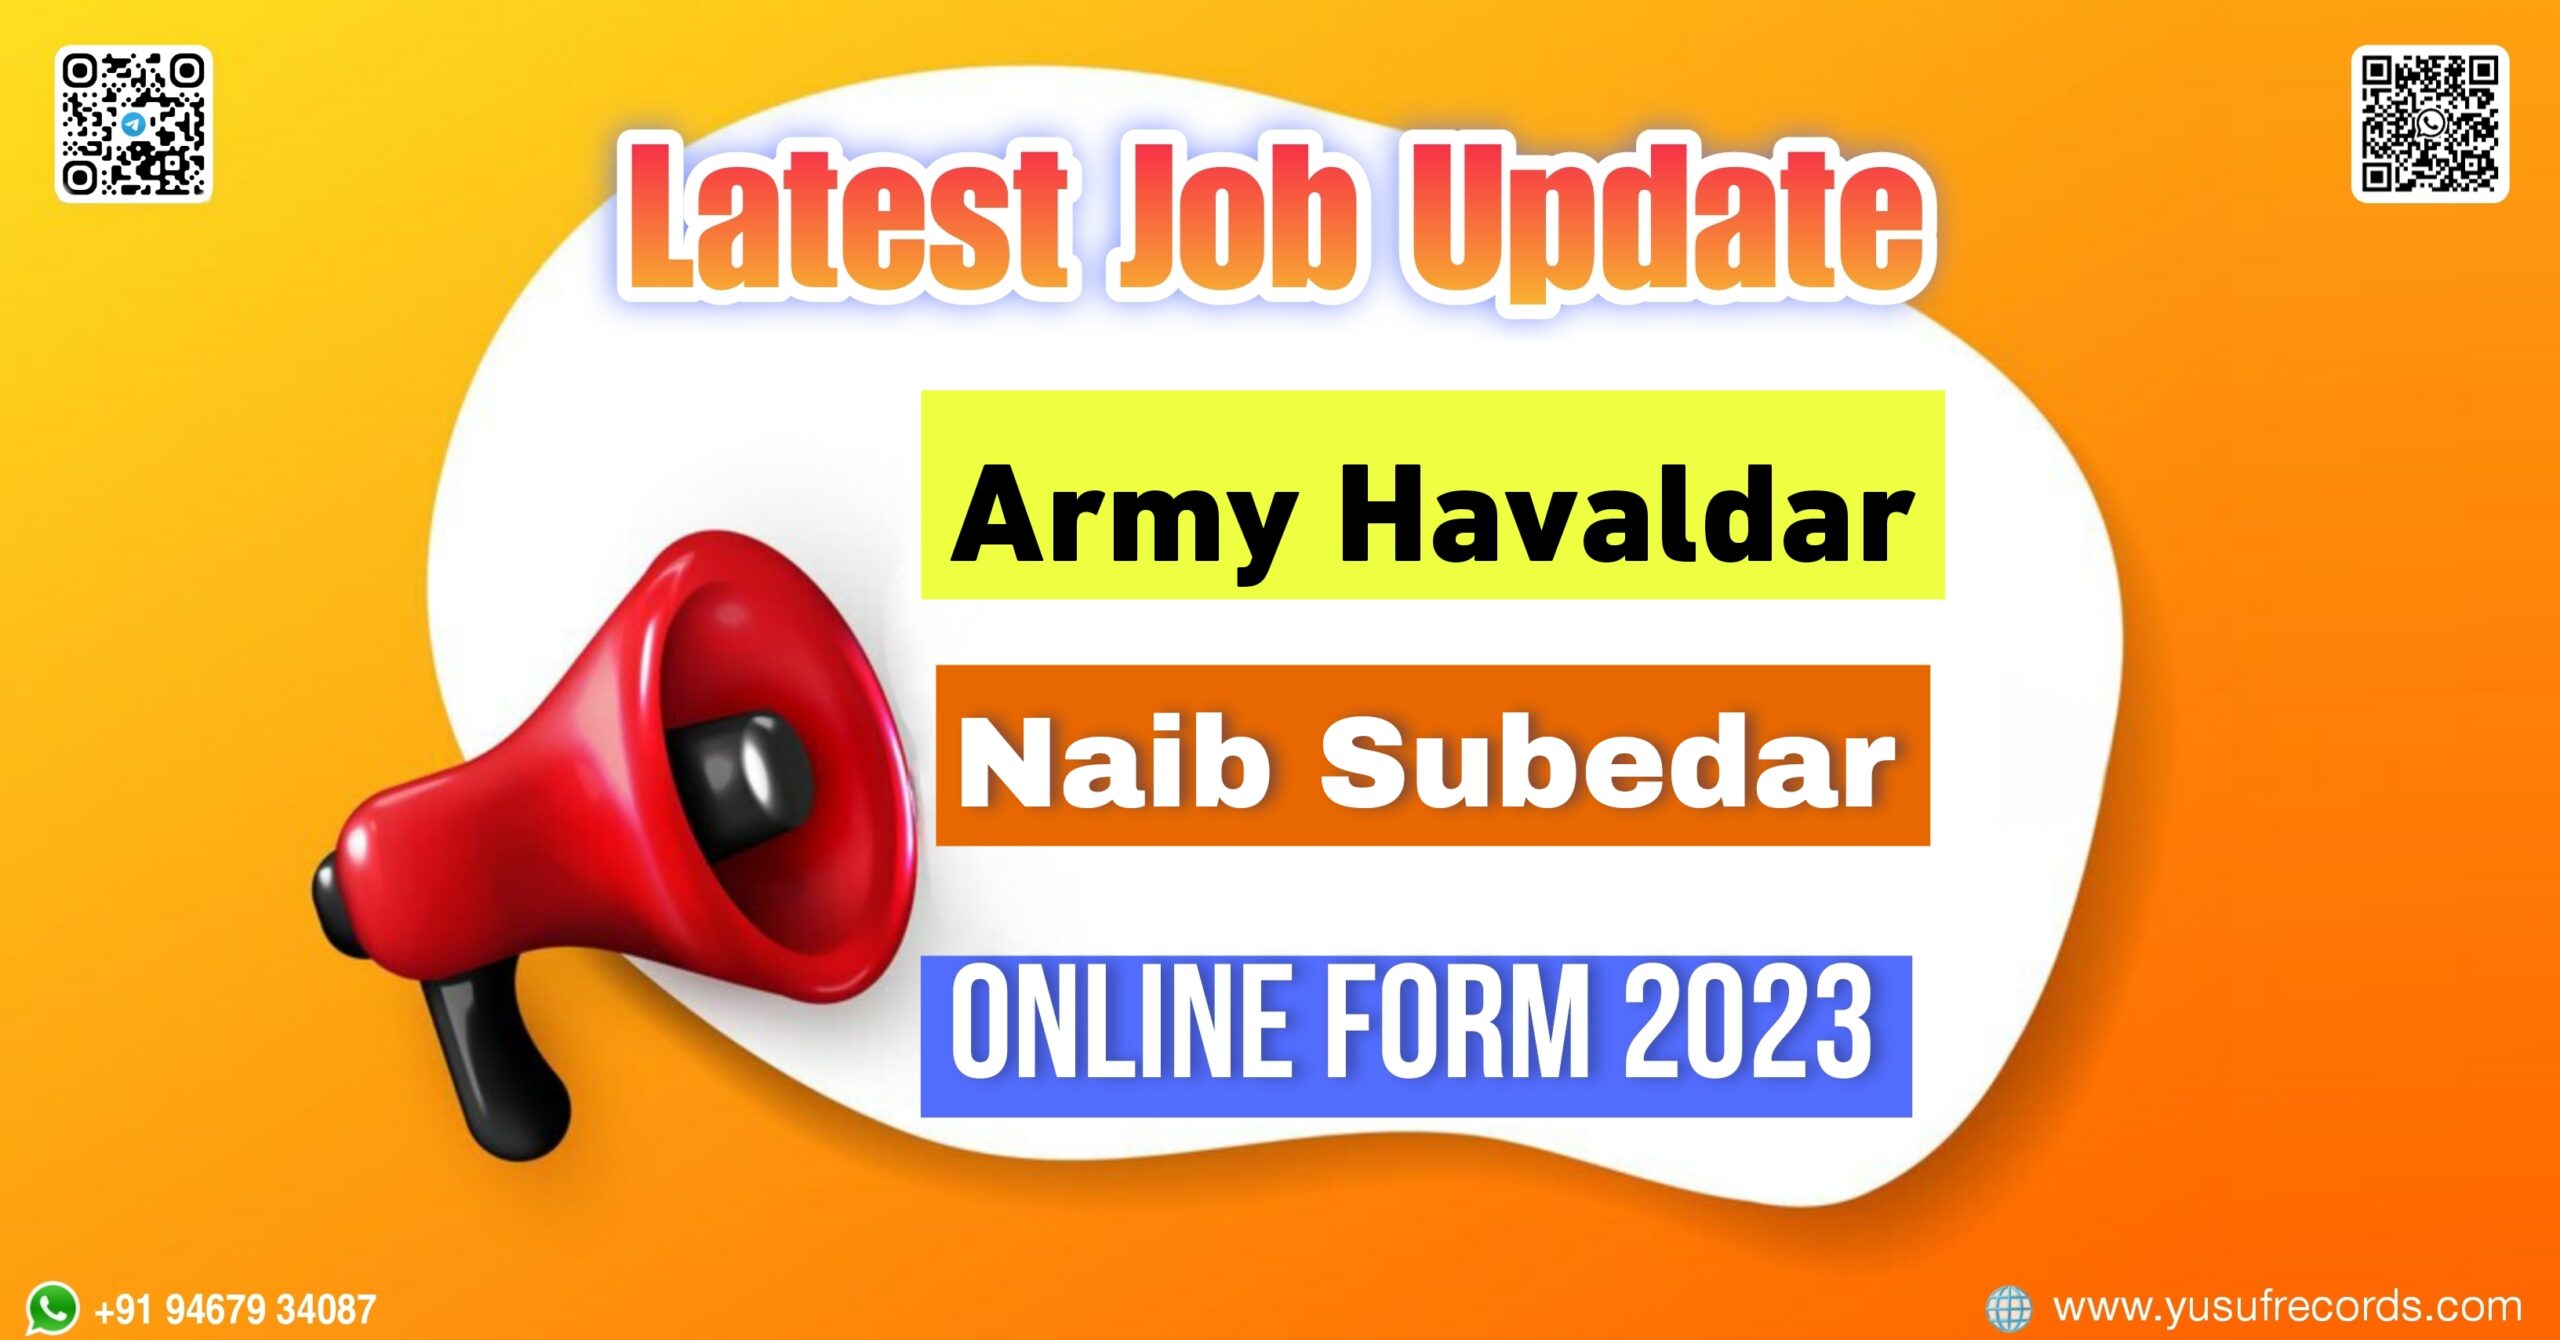 Army Havaldar Naib Subedar Online Form yusufrecords